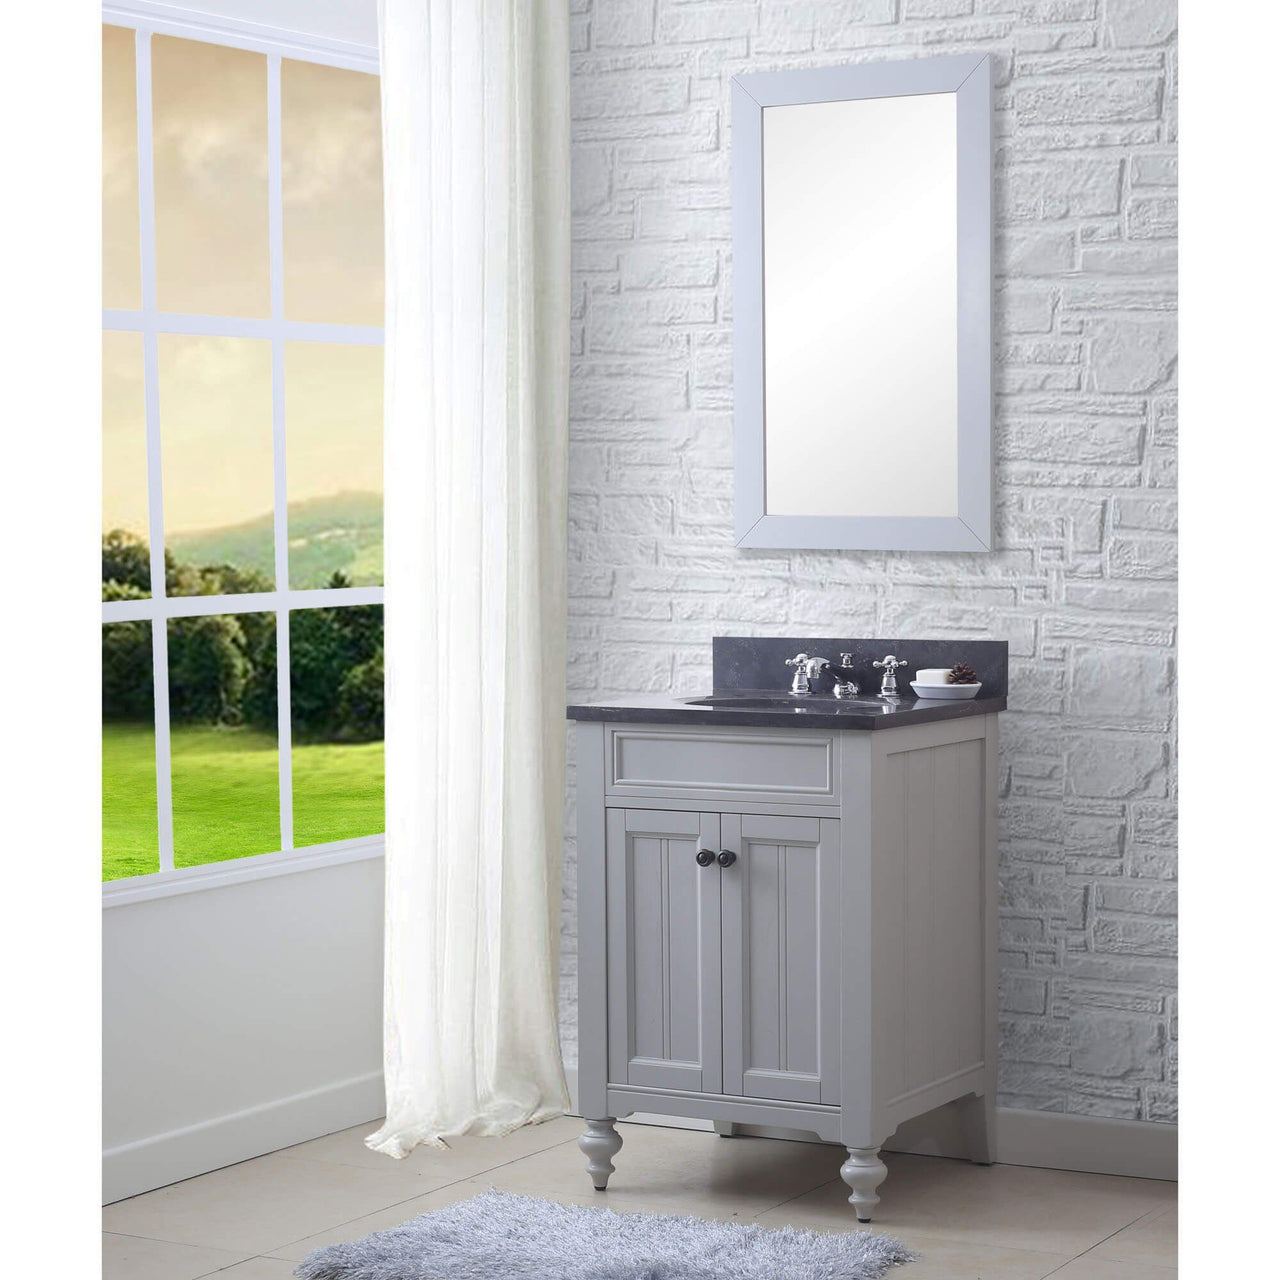 POTENZA 30" Earl Grey Single Sink Bathroom Vanity And Faucet Vanity Water Creation 